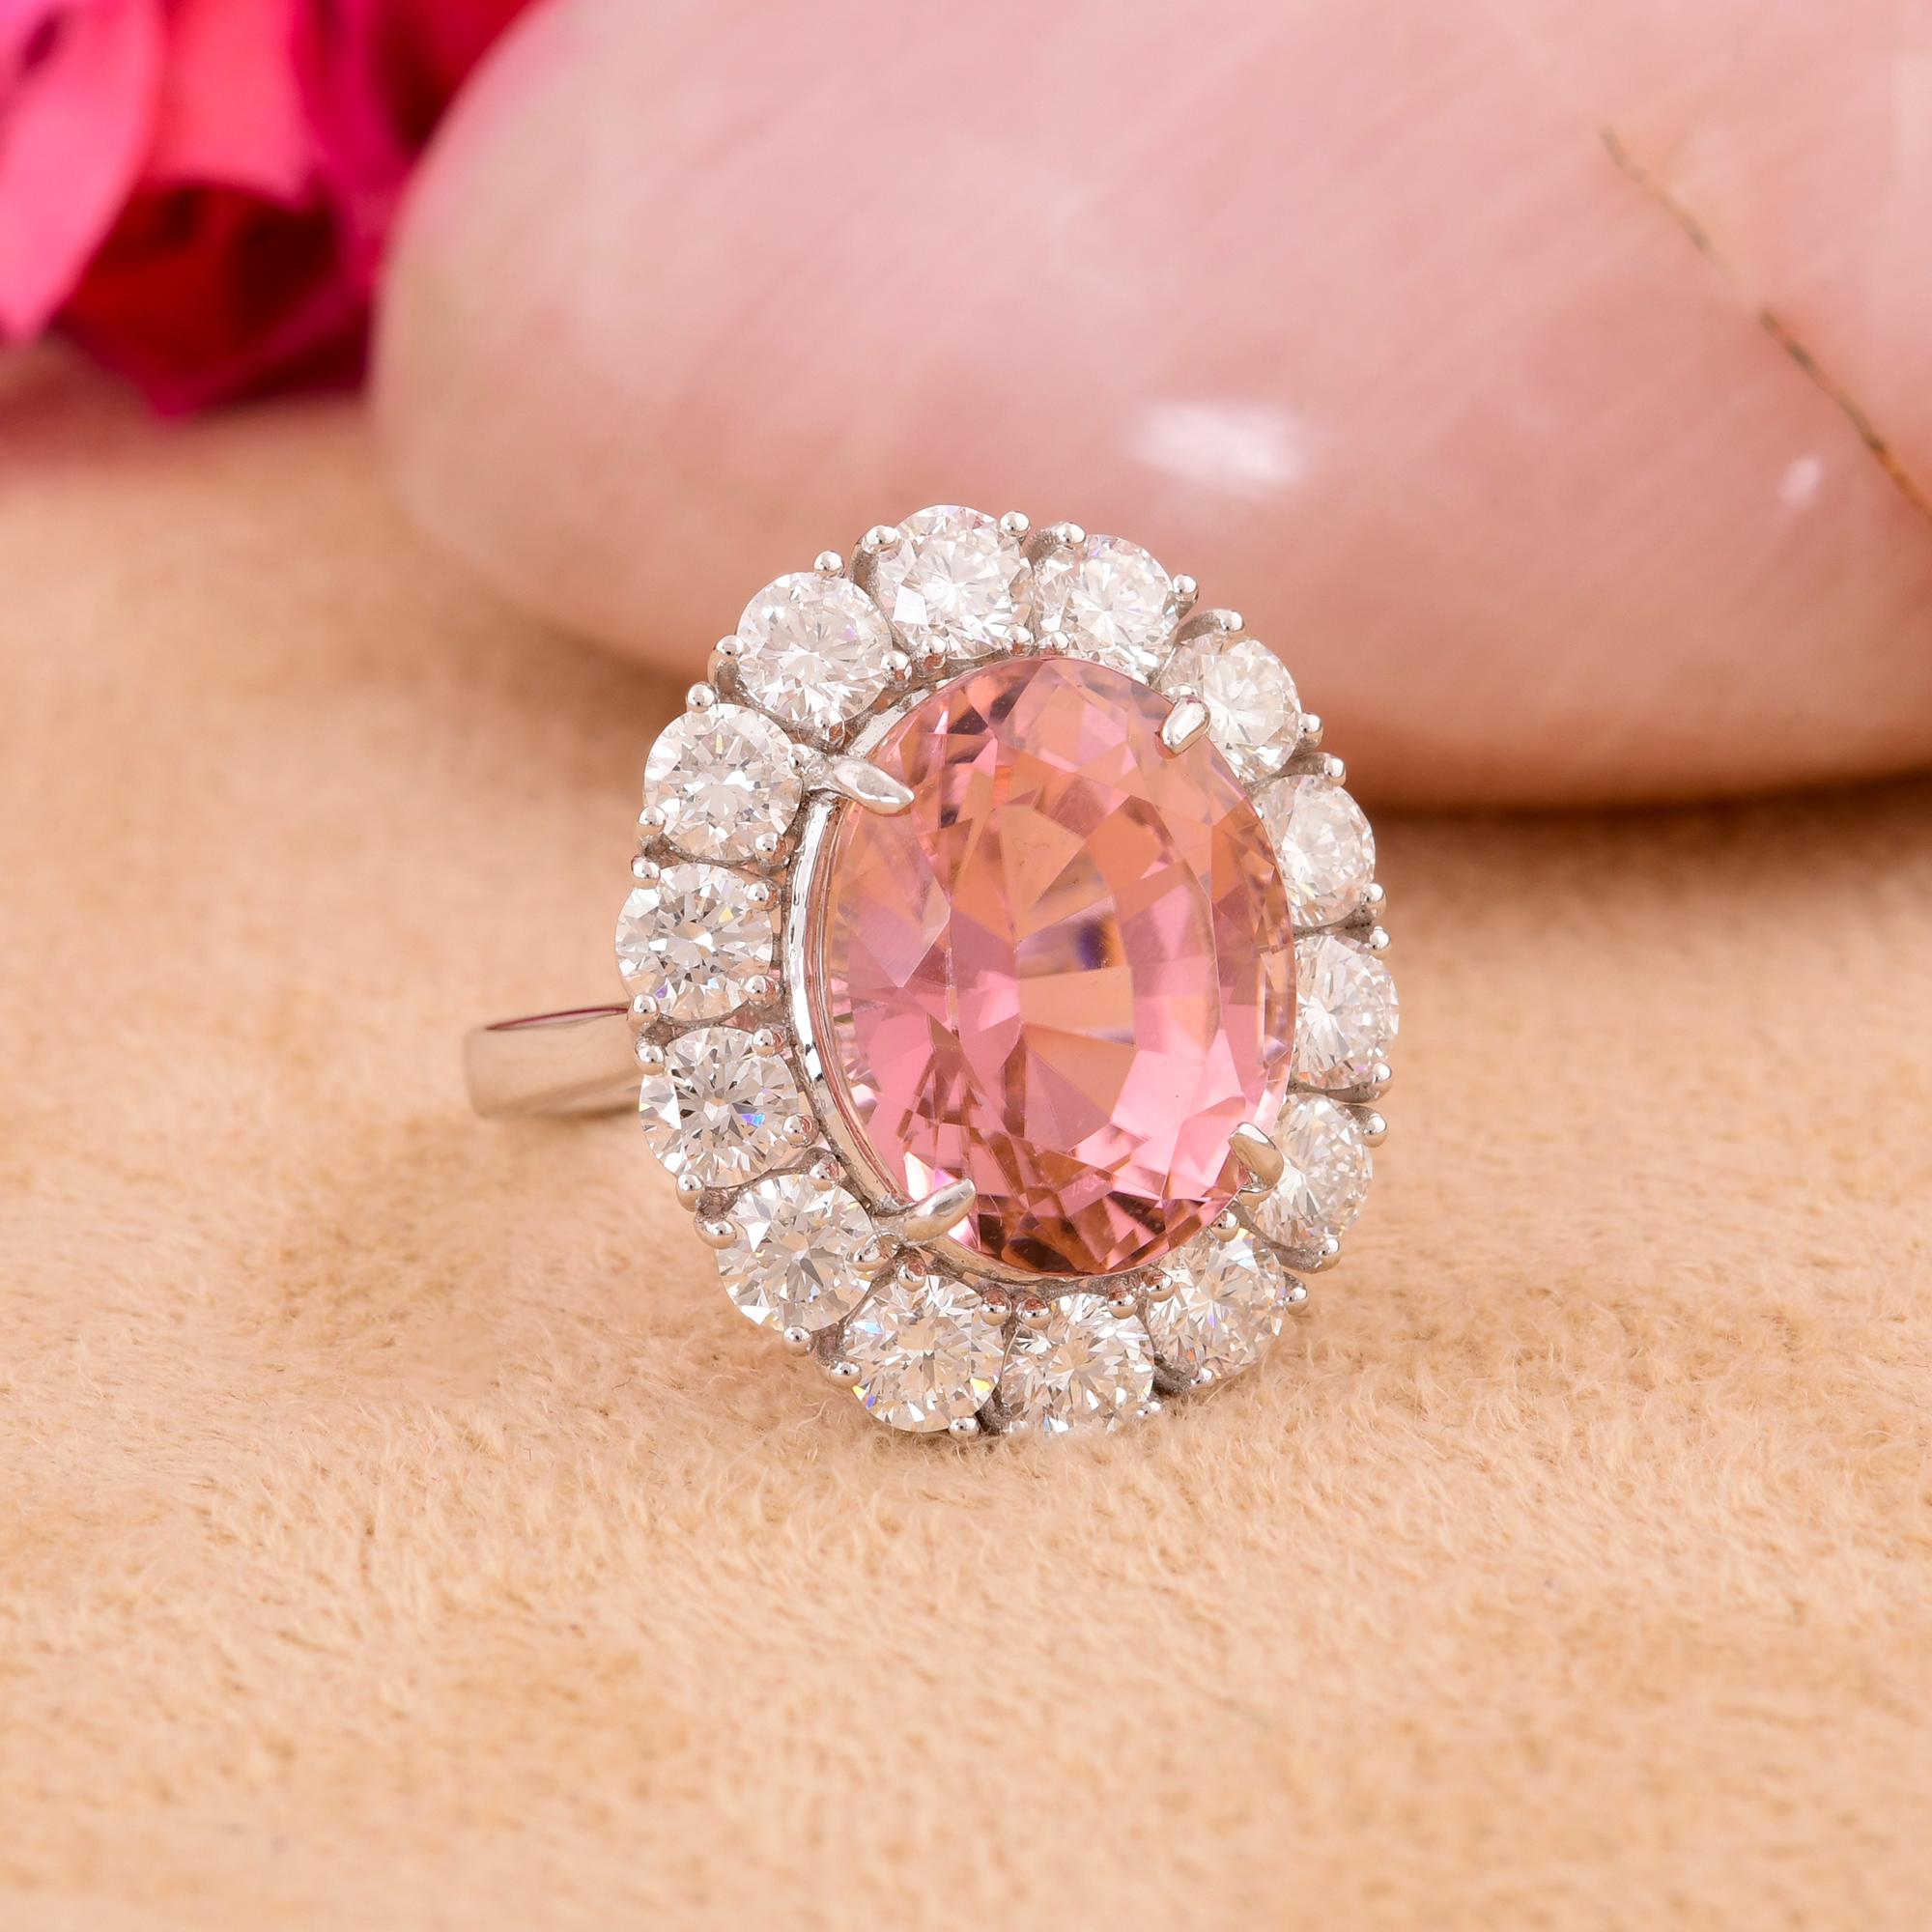 Women's Oval Pink Tourmaline Gemstone Cocktail Ring Diamond 18 Karat White Gold Jewelry For Sale